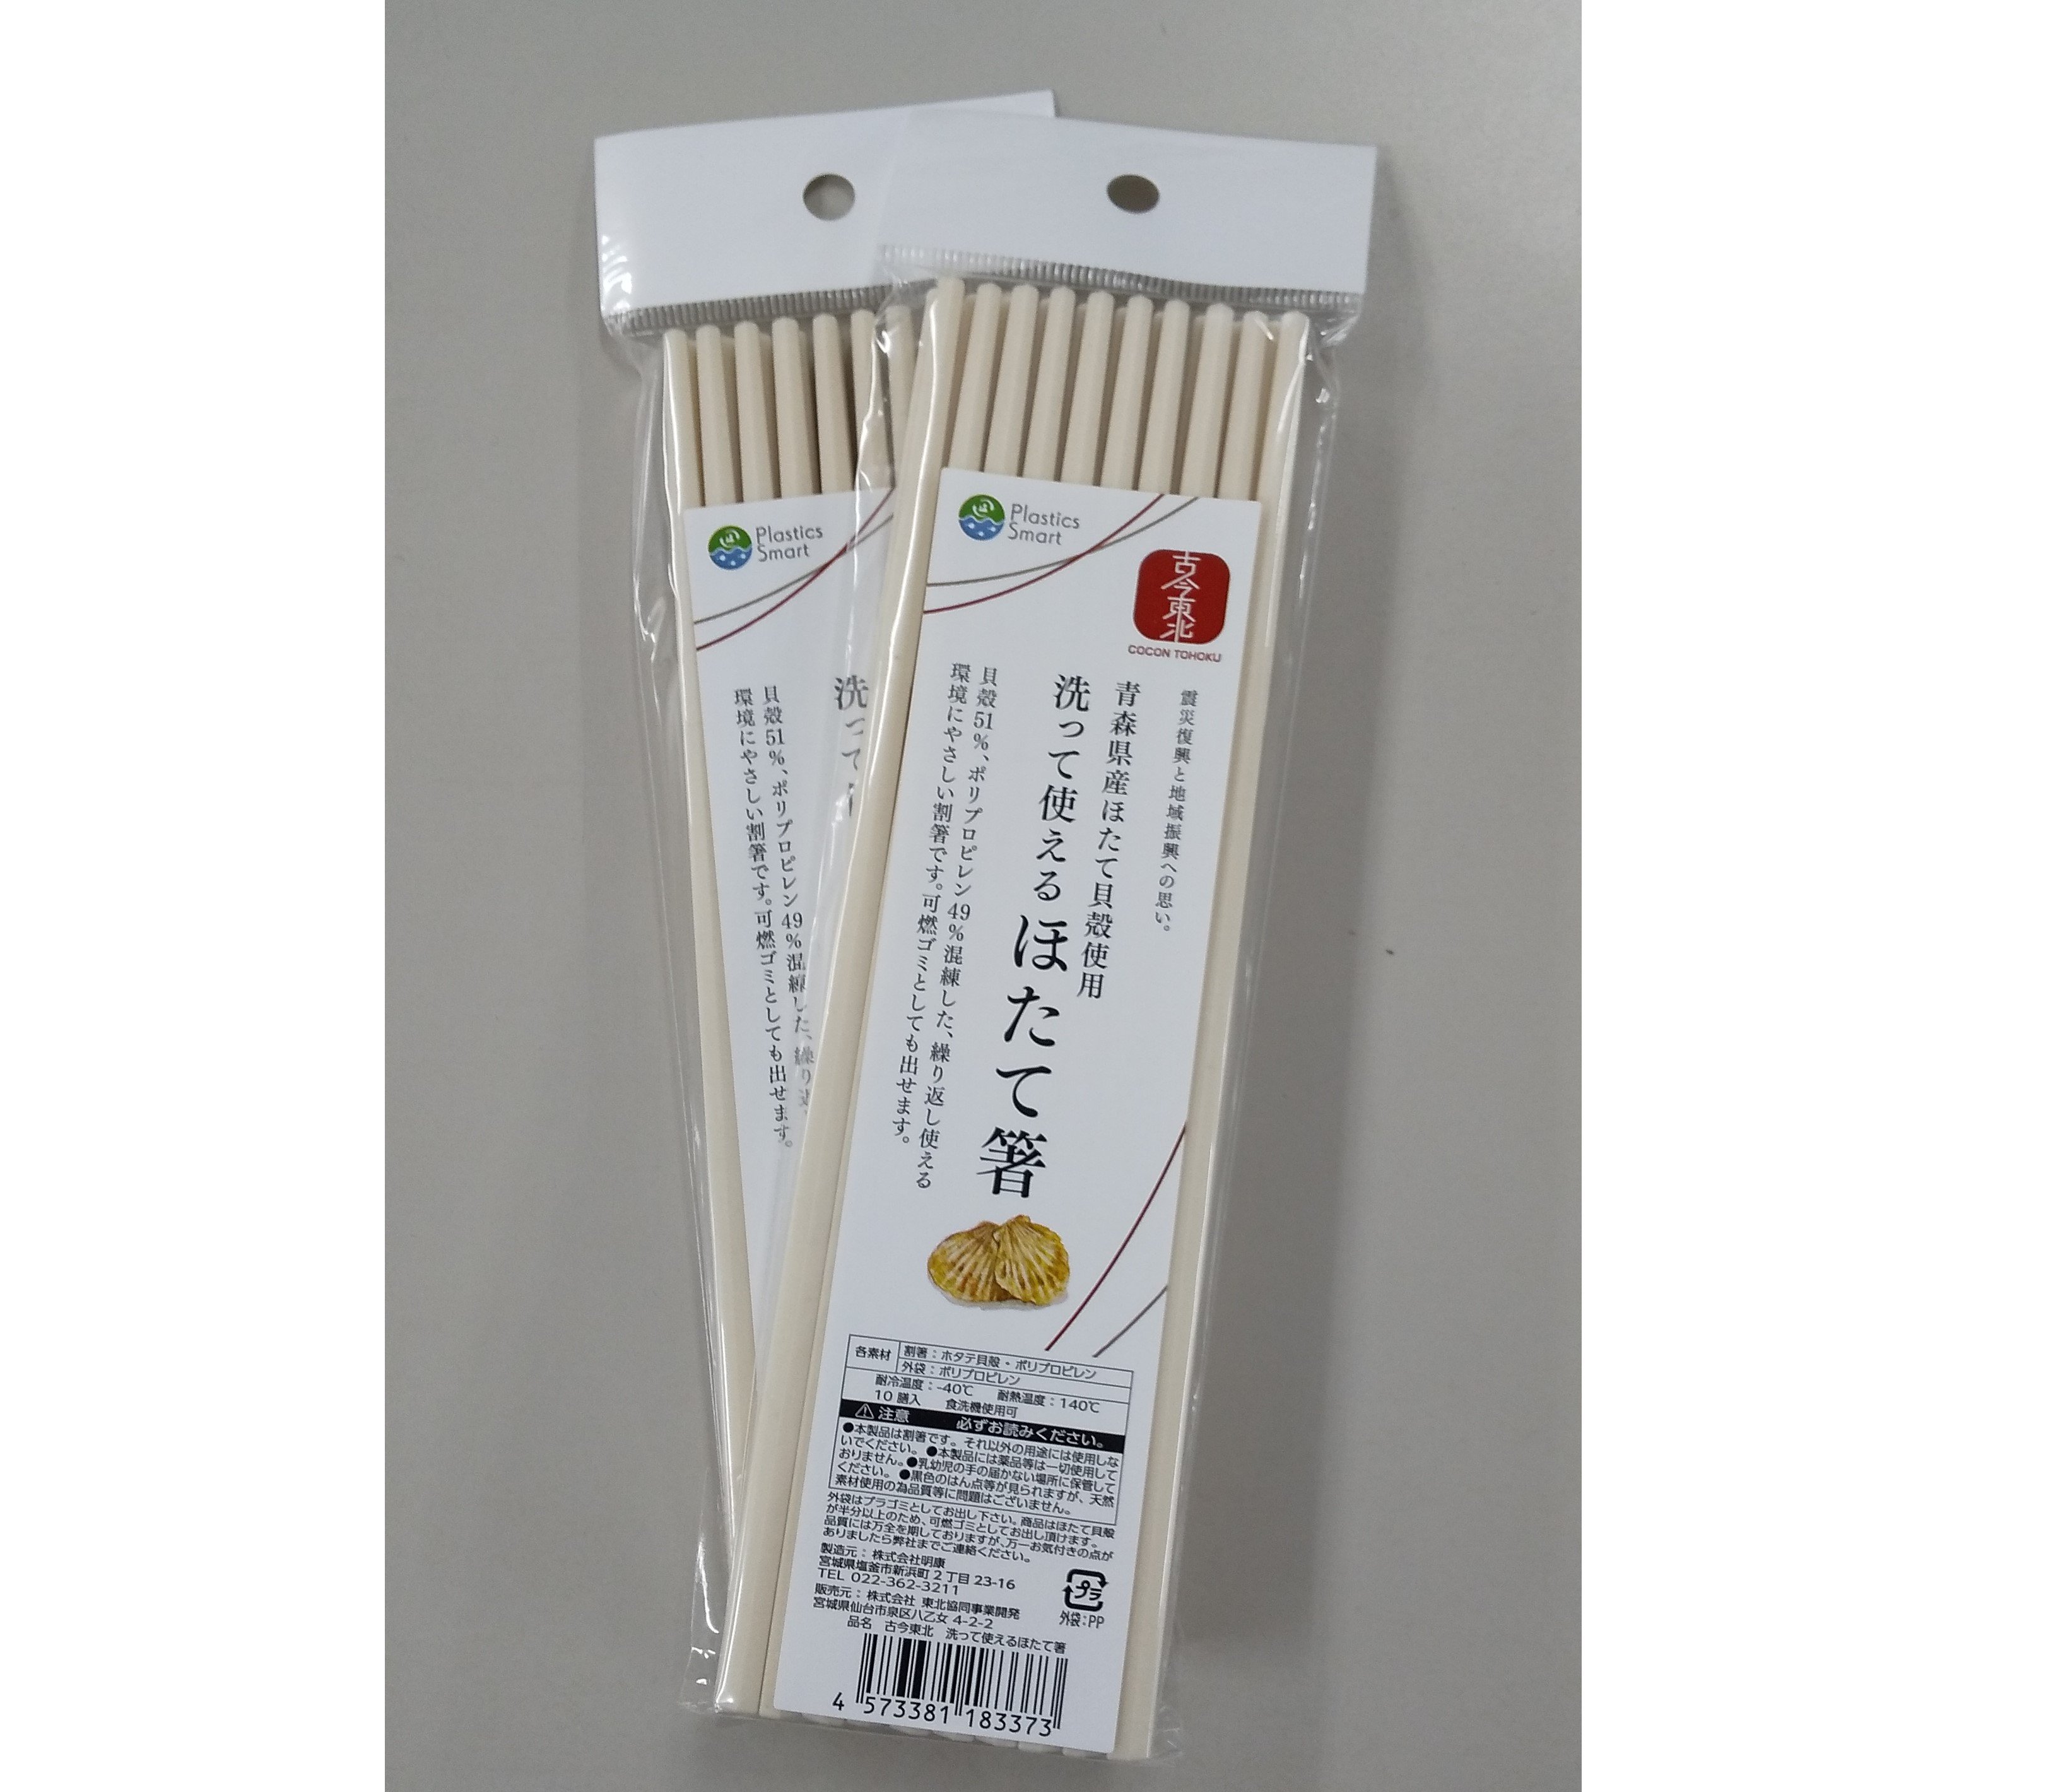 Environmentally friendly chopsticks using scallop shells